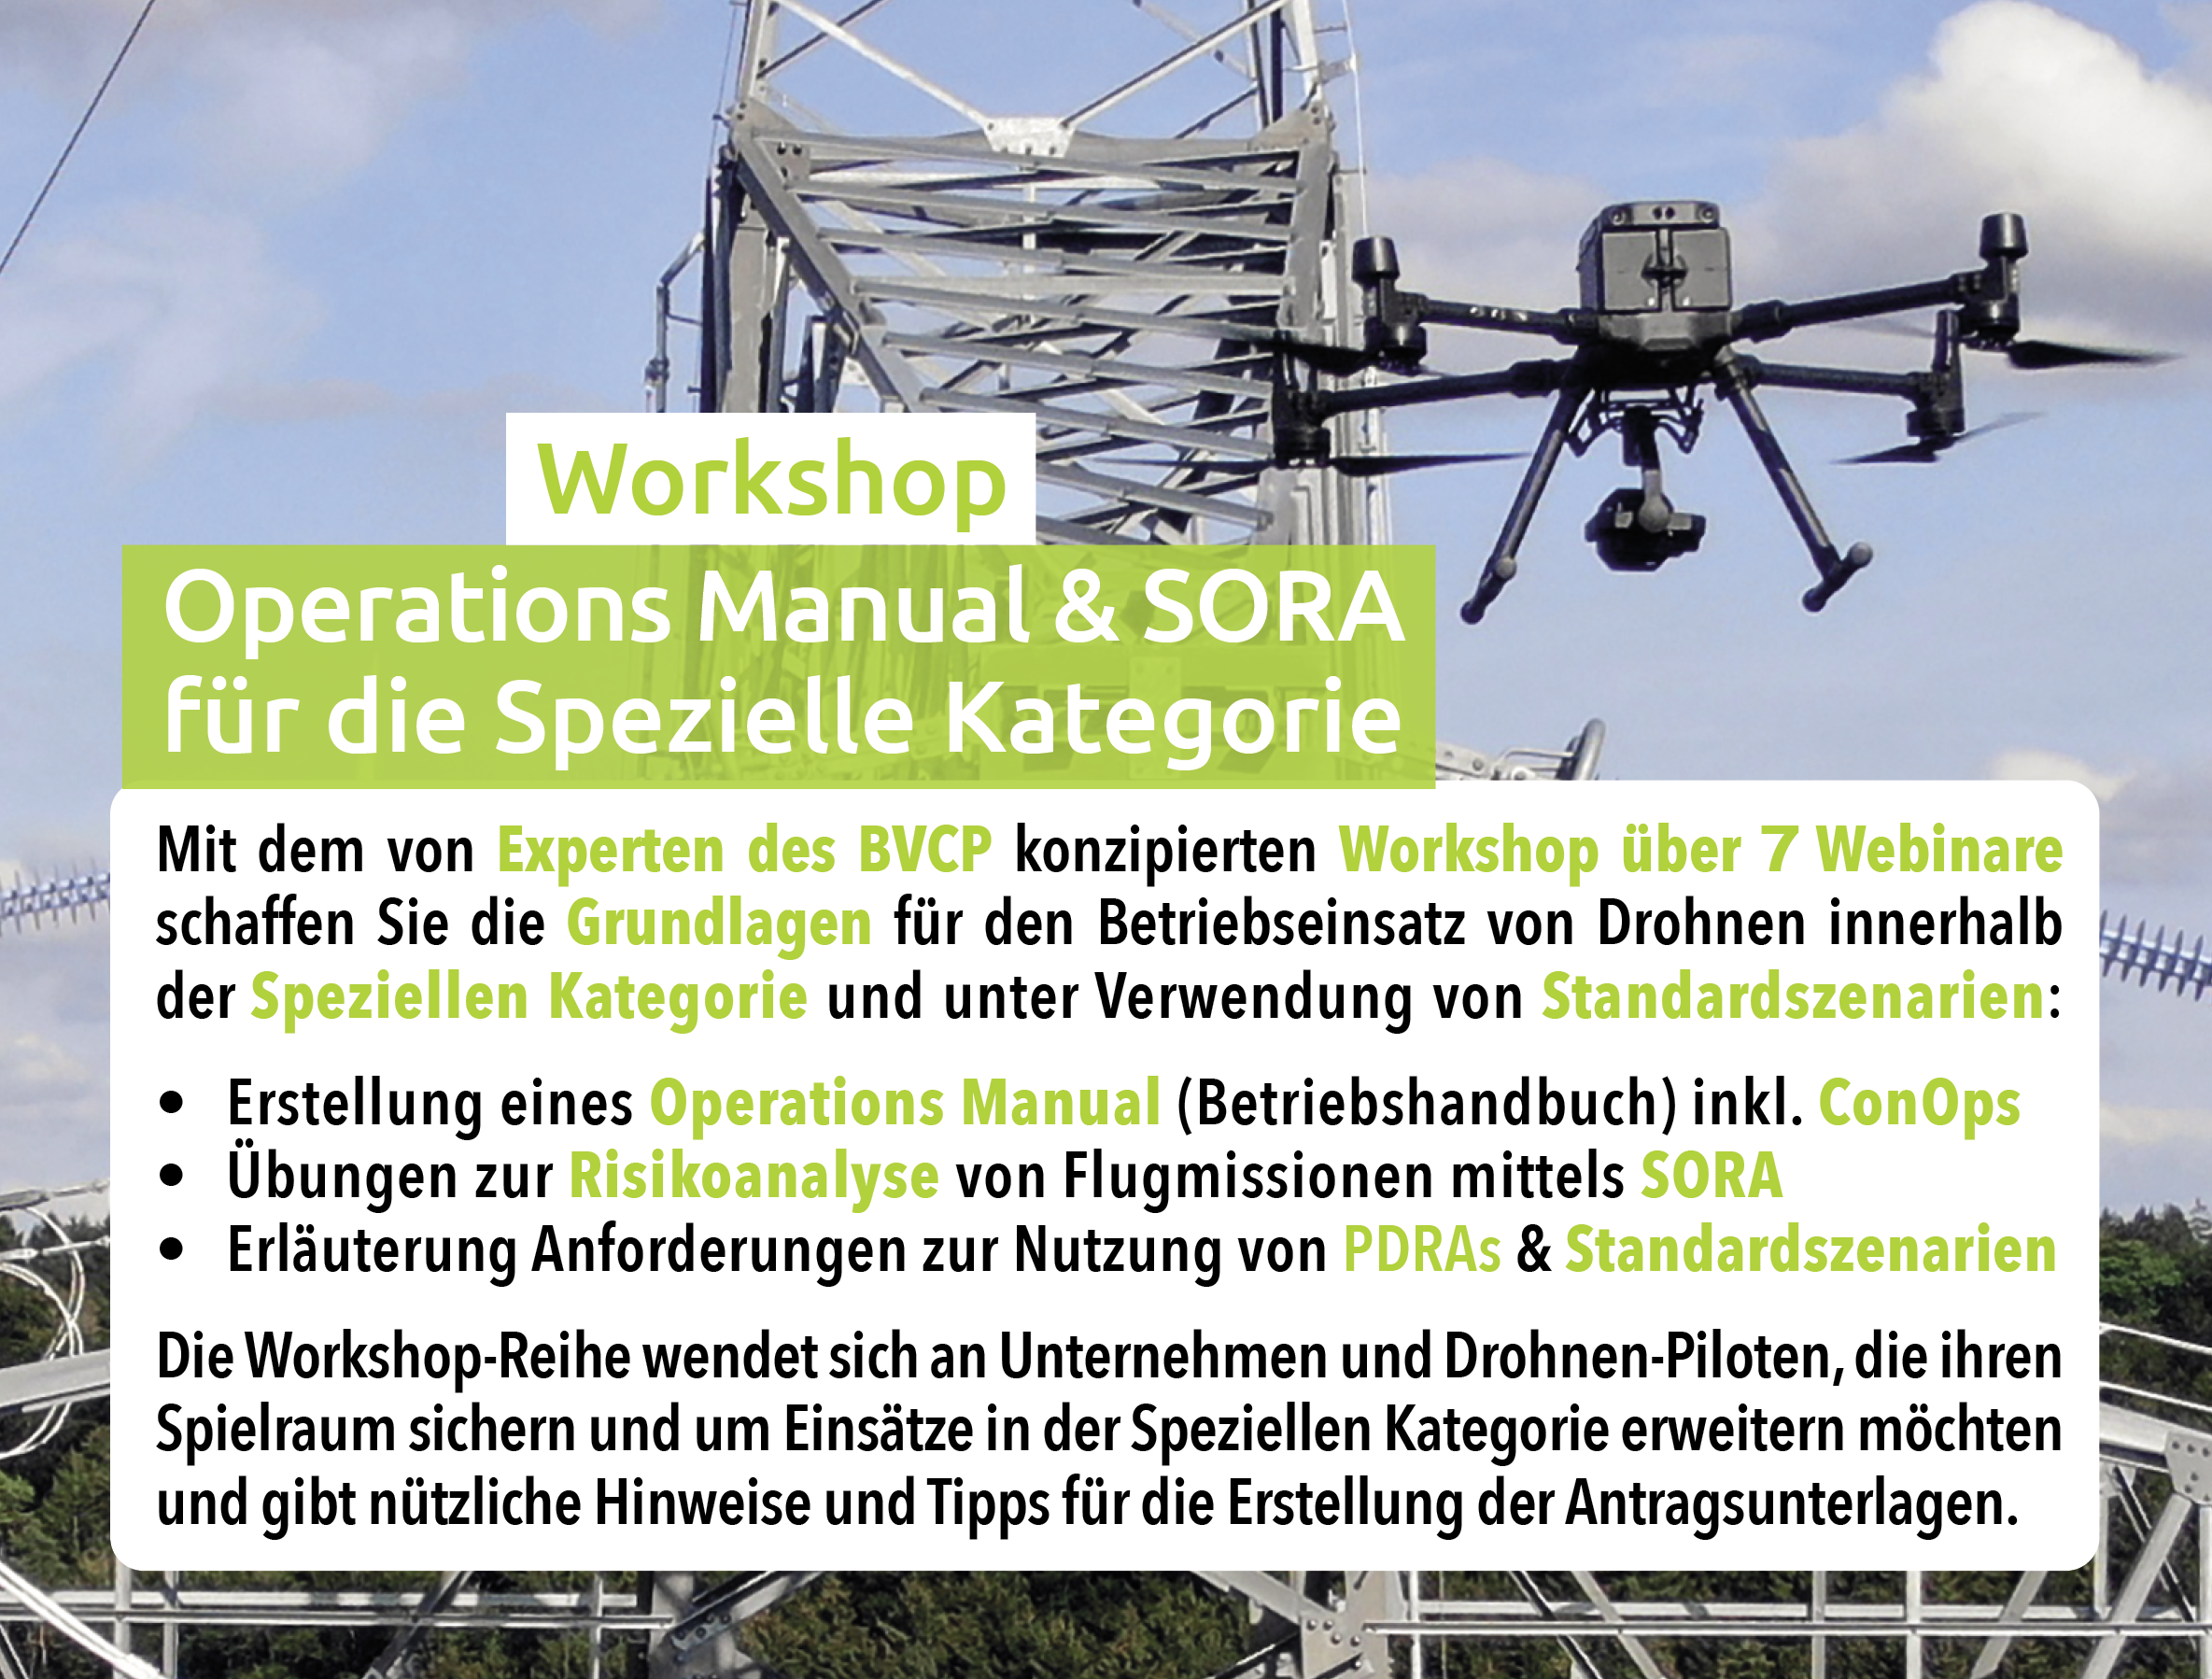 Kurzbeschreibung Inhalte Workshop Operations Manual & SORA